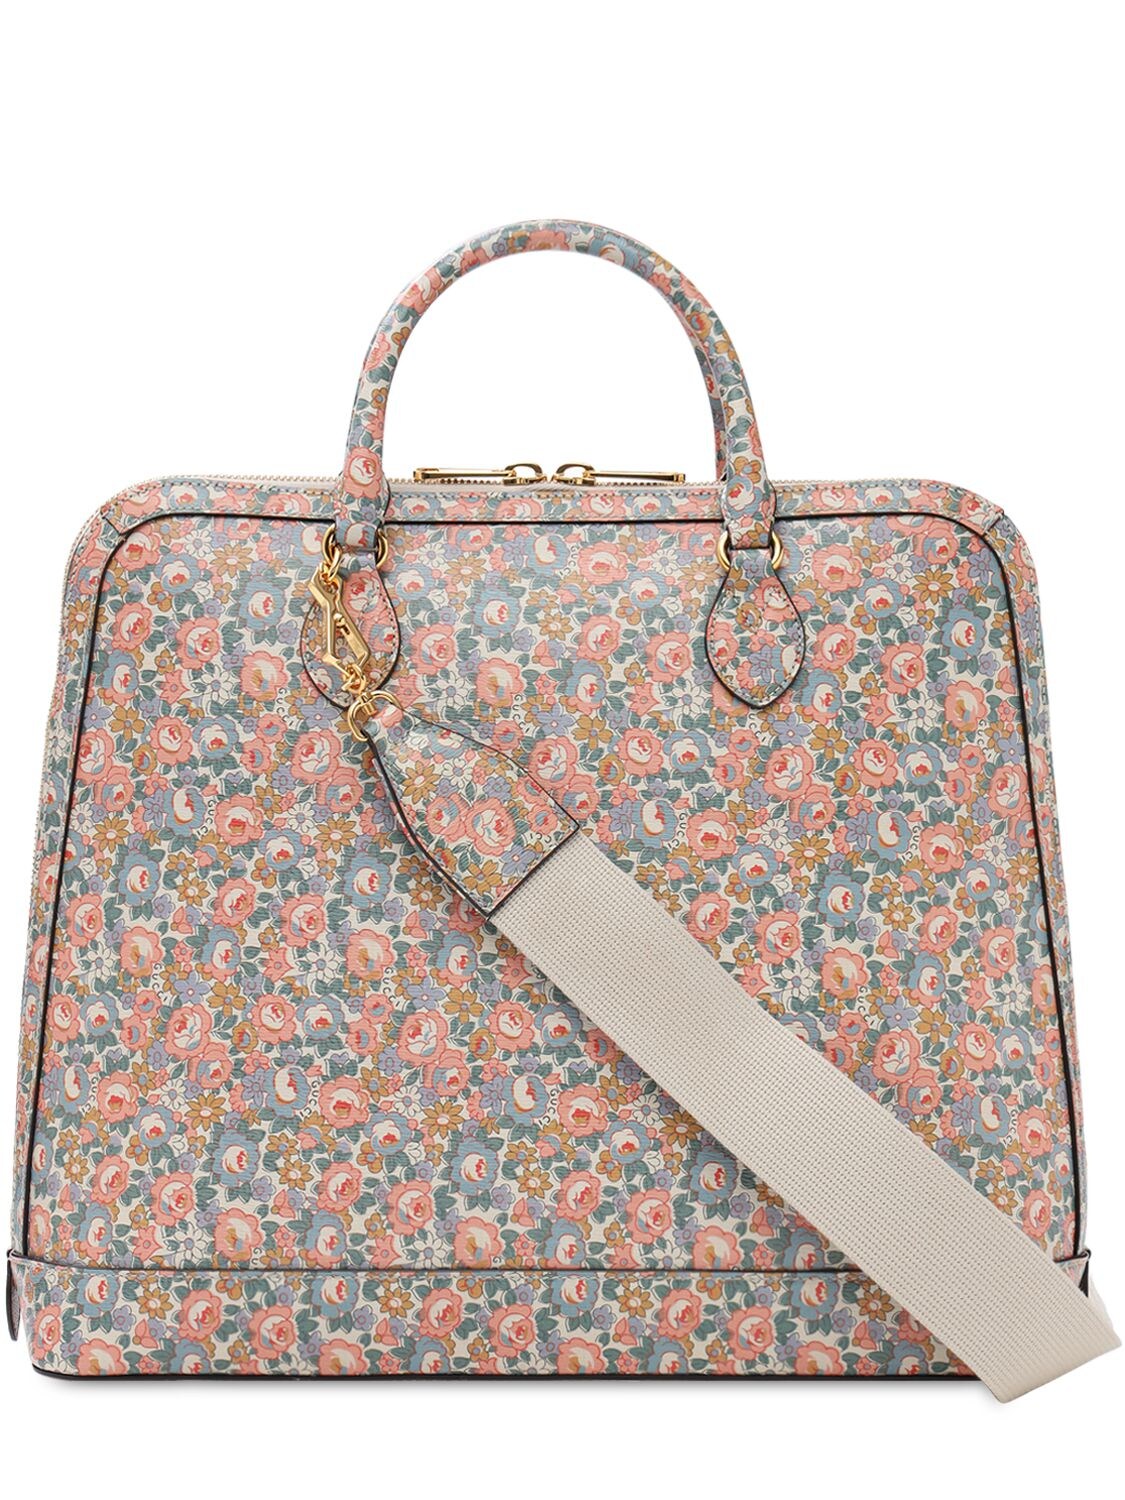 Gucci Horsebit 1955 Liberty London Small Duffle Bag in Pink for Men